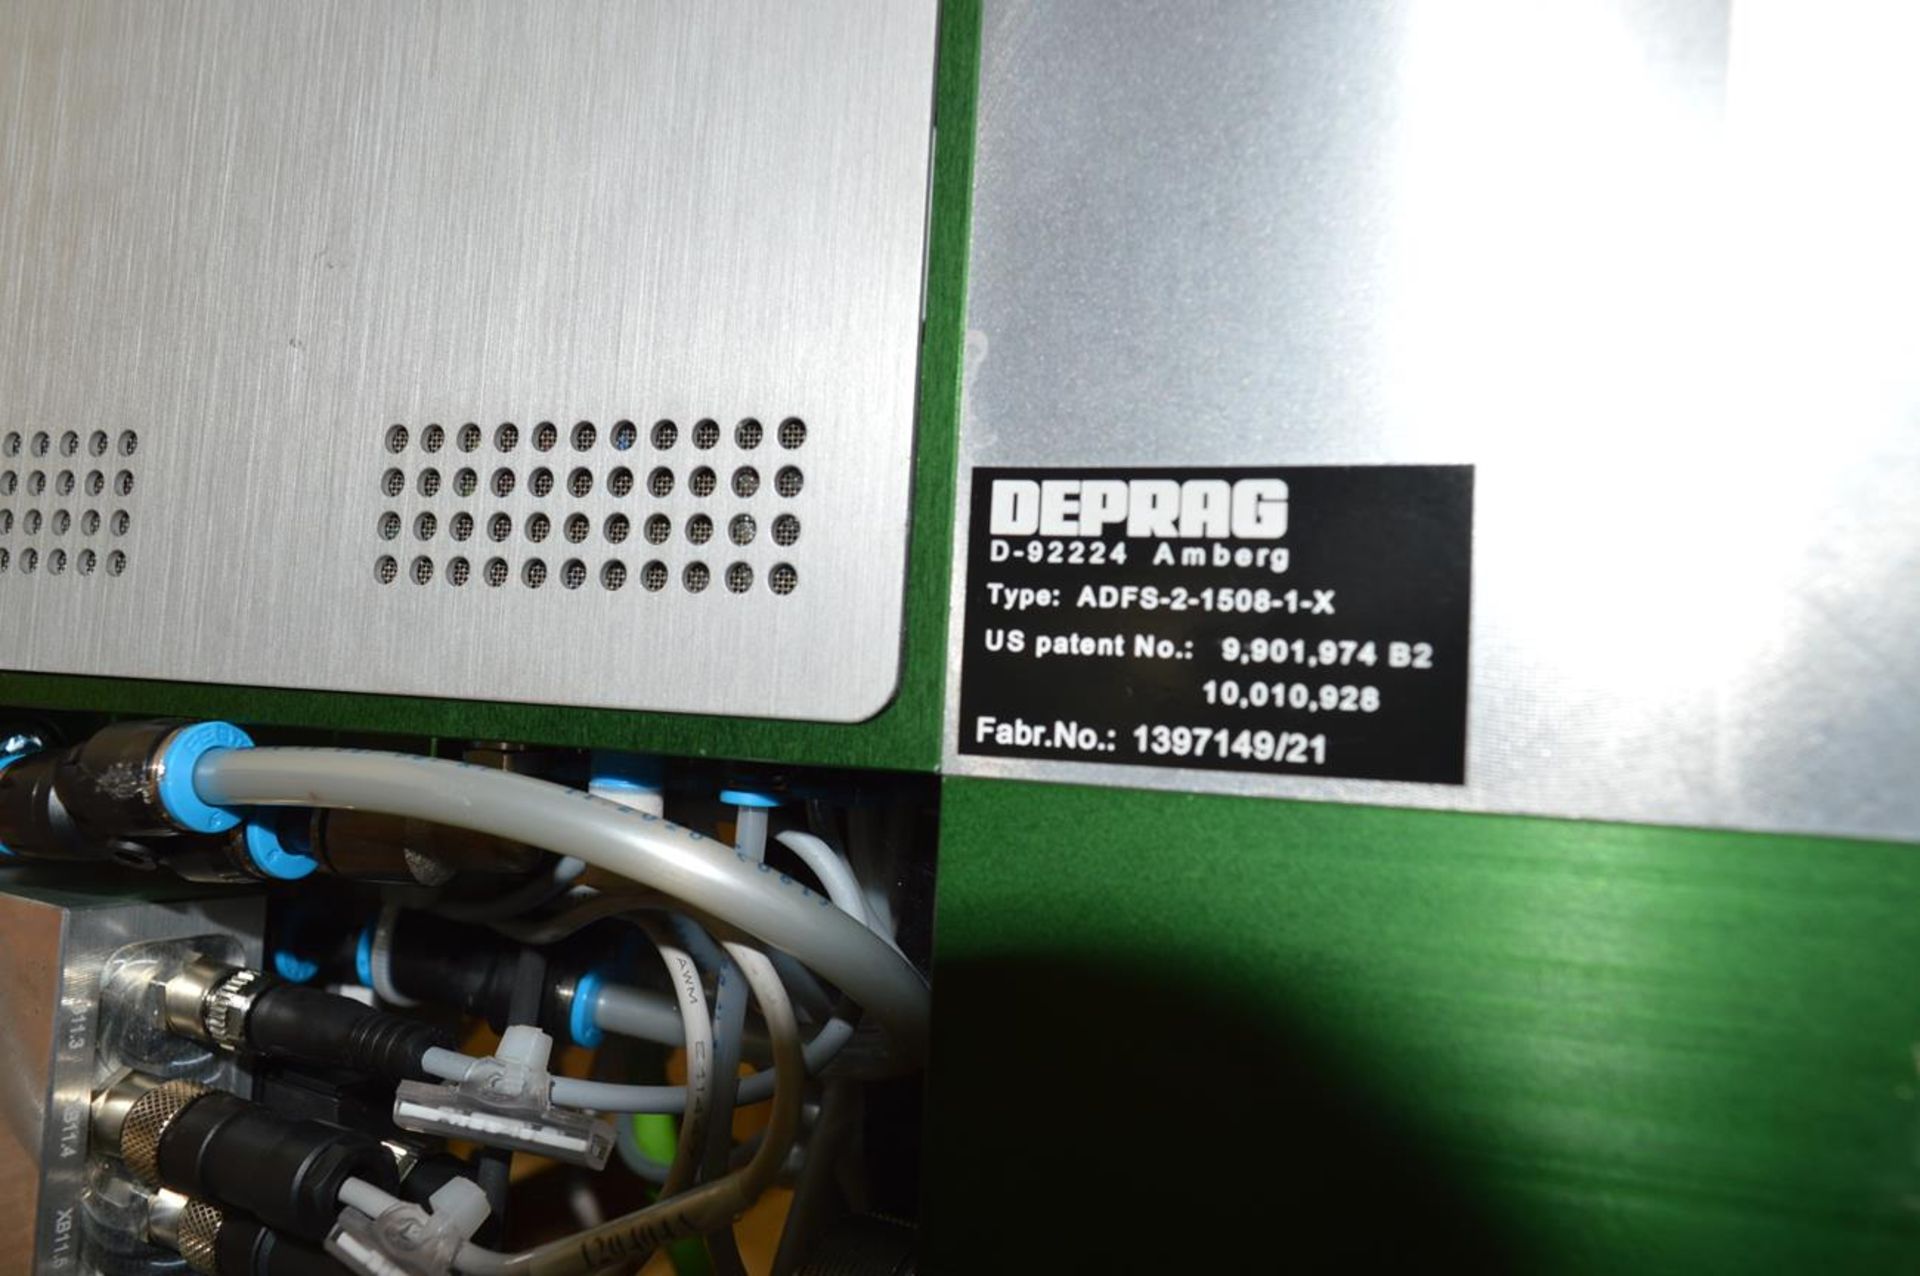 Deprag, ADFS-2-1508-1-X adaptive screwdriving system, Serial No. 1397149/21 - Image 3 of 3